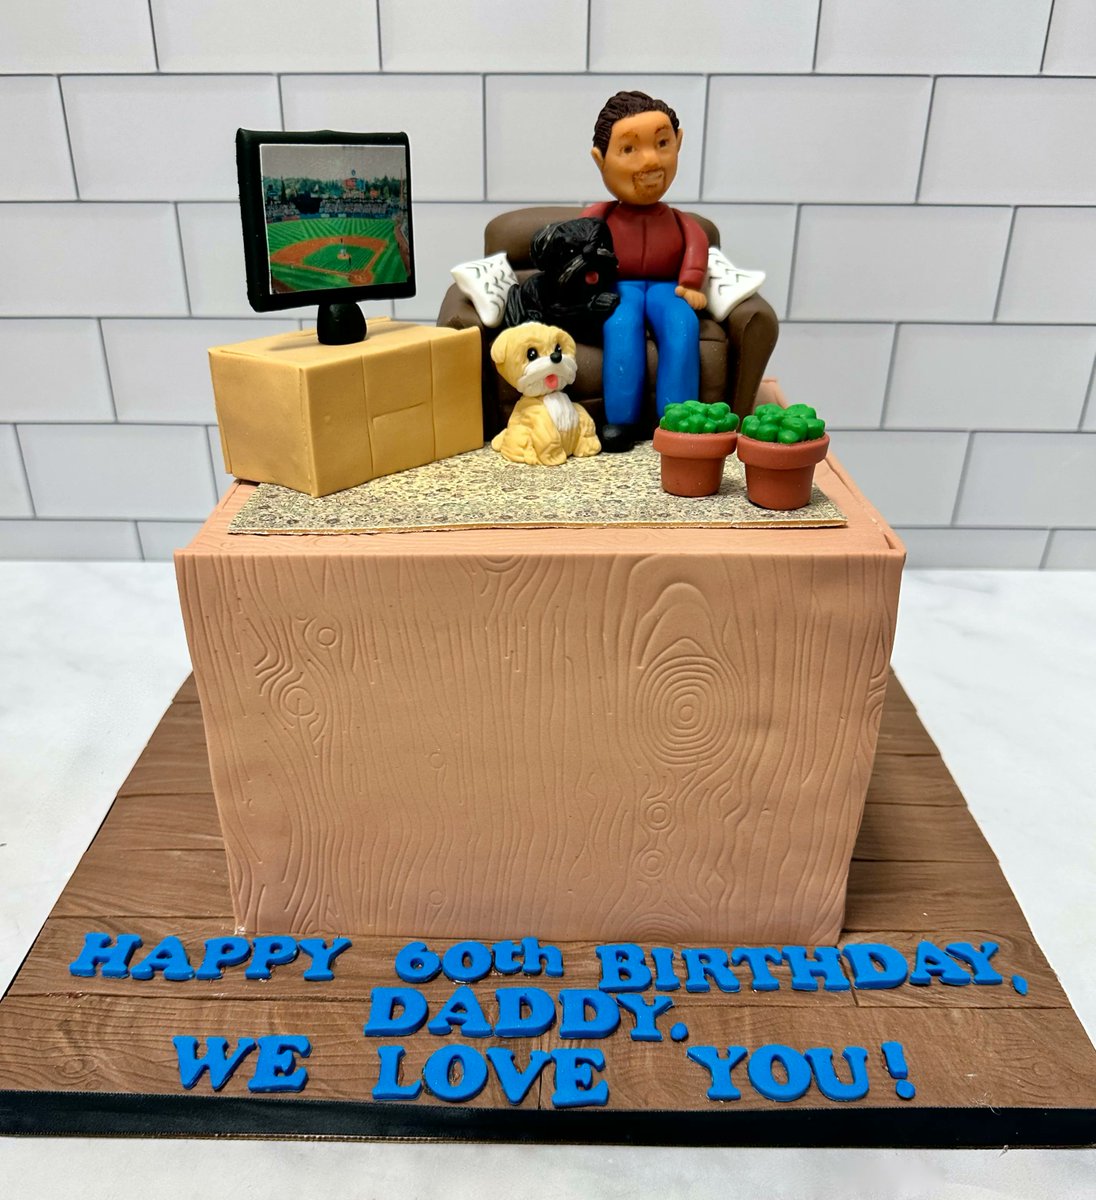 Put your dad on a cake! 📺 🐶 🏟️ ❤️

#dadcake #kupcakekitchen #wantcake #cakefordad #cakeformen #cakeforman #cakeinspiration #birthdaycakeideas #birthdayideas #birthdayinspiration #customcakes #cakeartist #3dcakes #birthdaycakeforman #cakeforhim  #birthdaycakeforhim #santaclarita